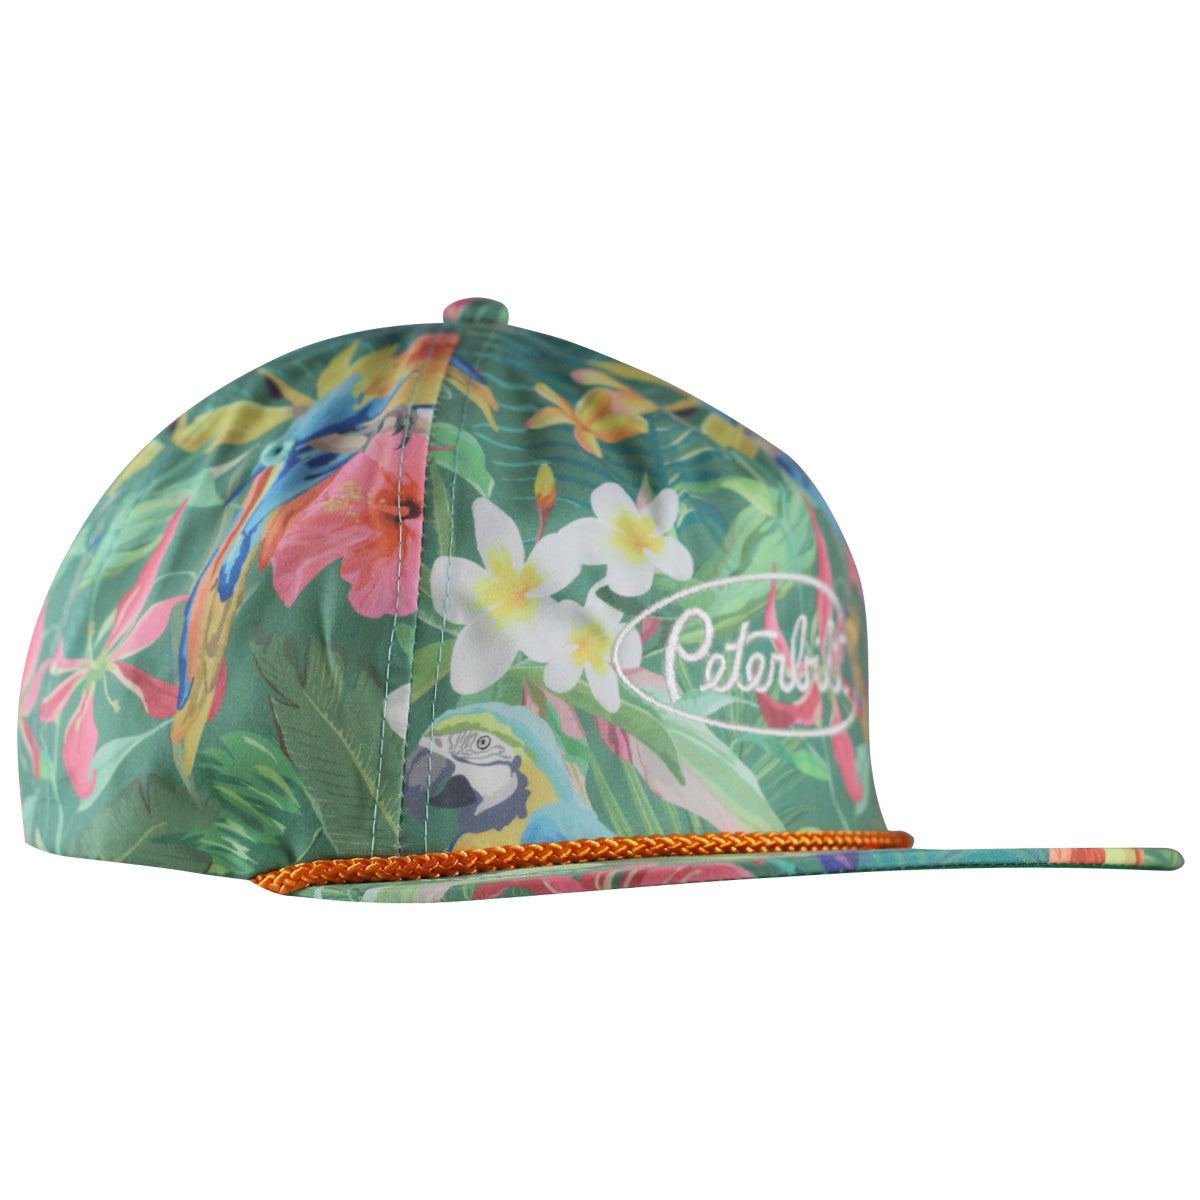 Imperial Hawaiian Rainforest Hat with White Peterbilt logo